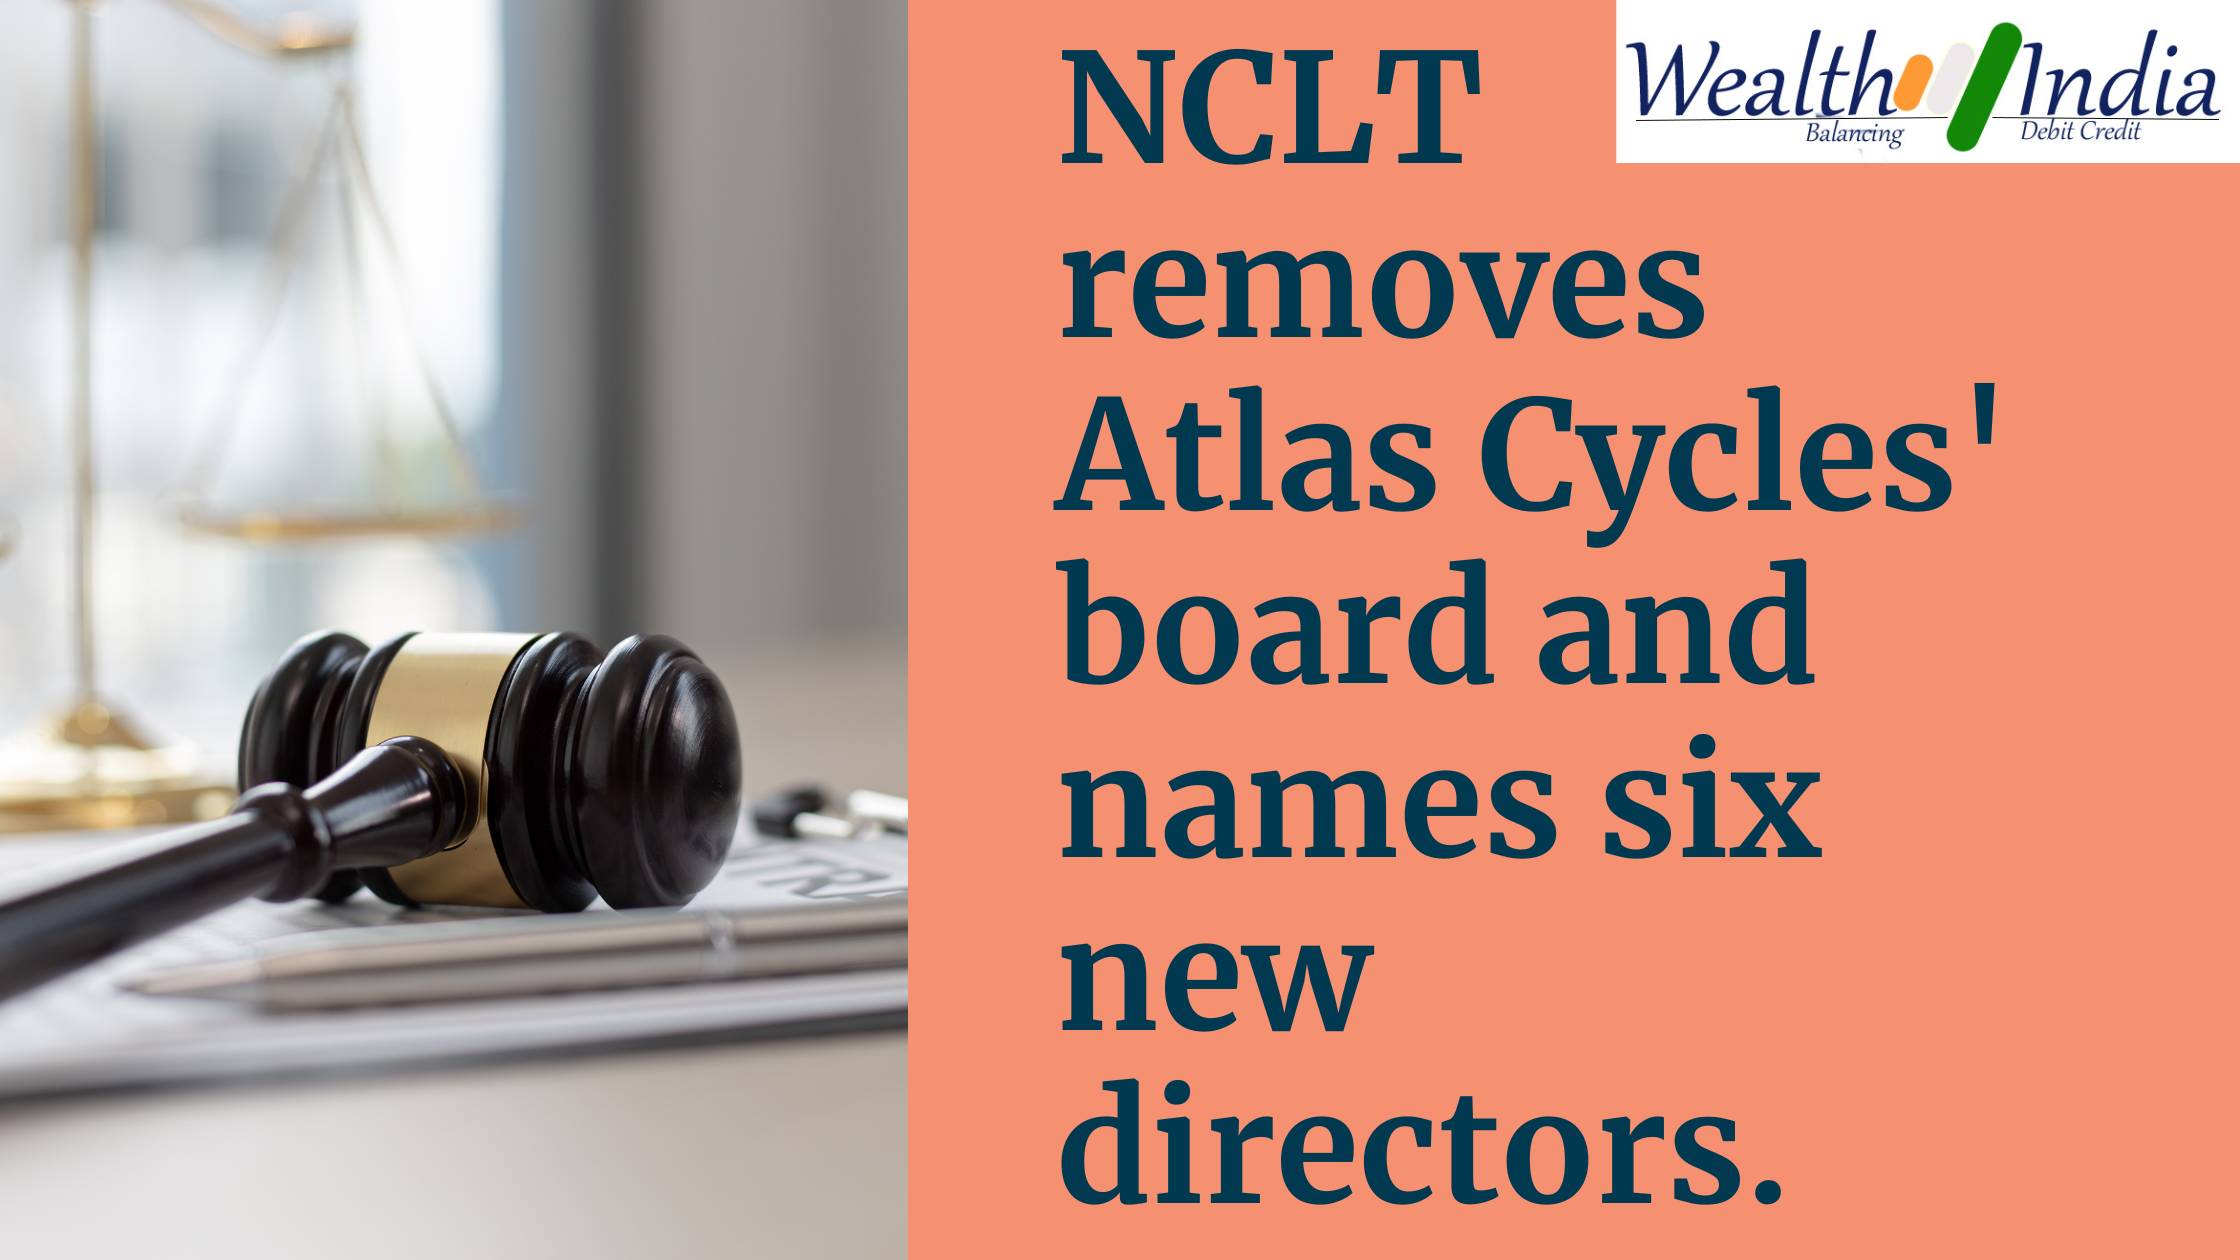 NCLT removes Atlas Cycles’ board and names six new directors.